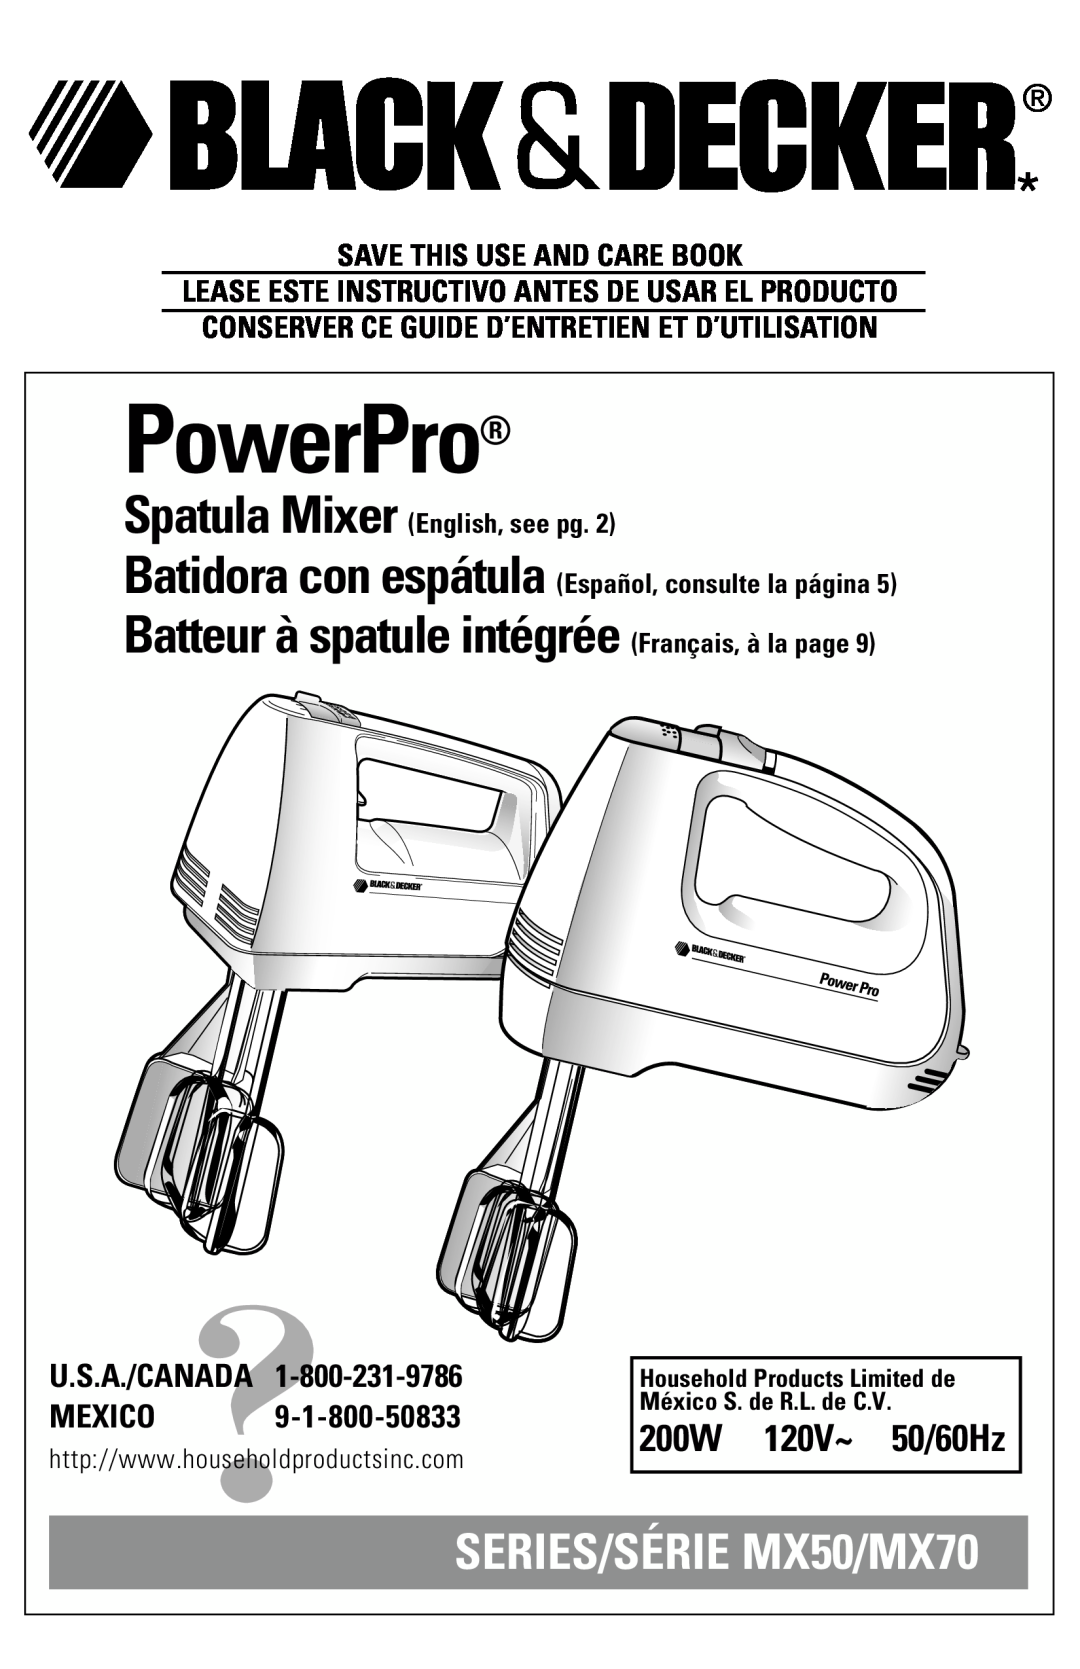 Black & Decker MX50, MX70 manual Save This Use And Care Book, Lease Este Instructivo Antes De Usar El Producto, PowerPro 